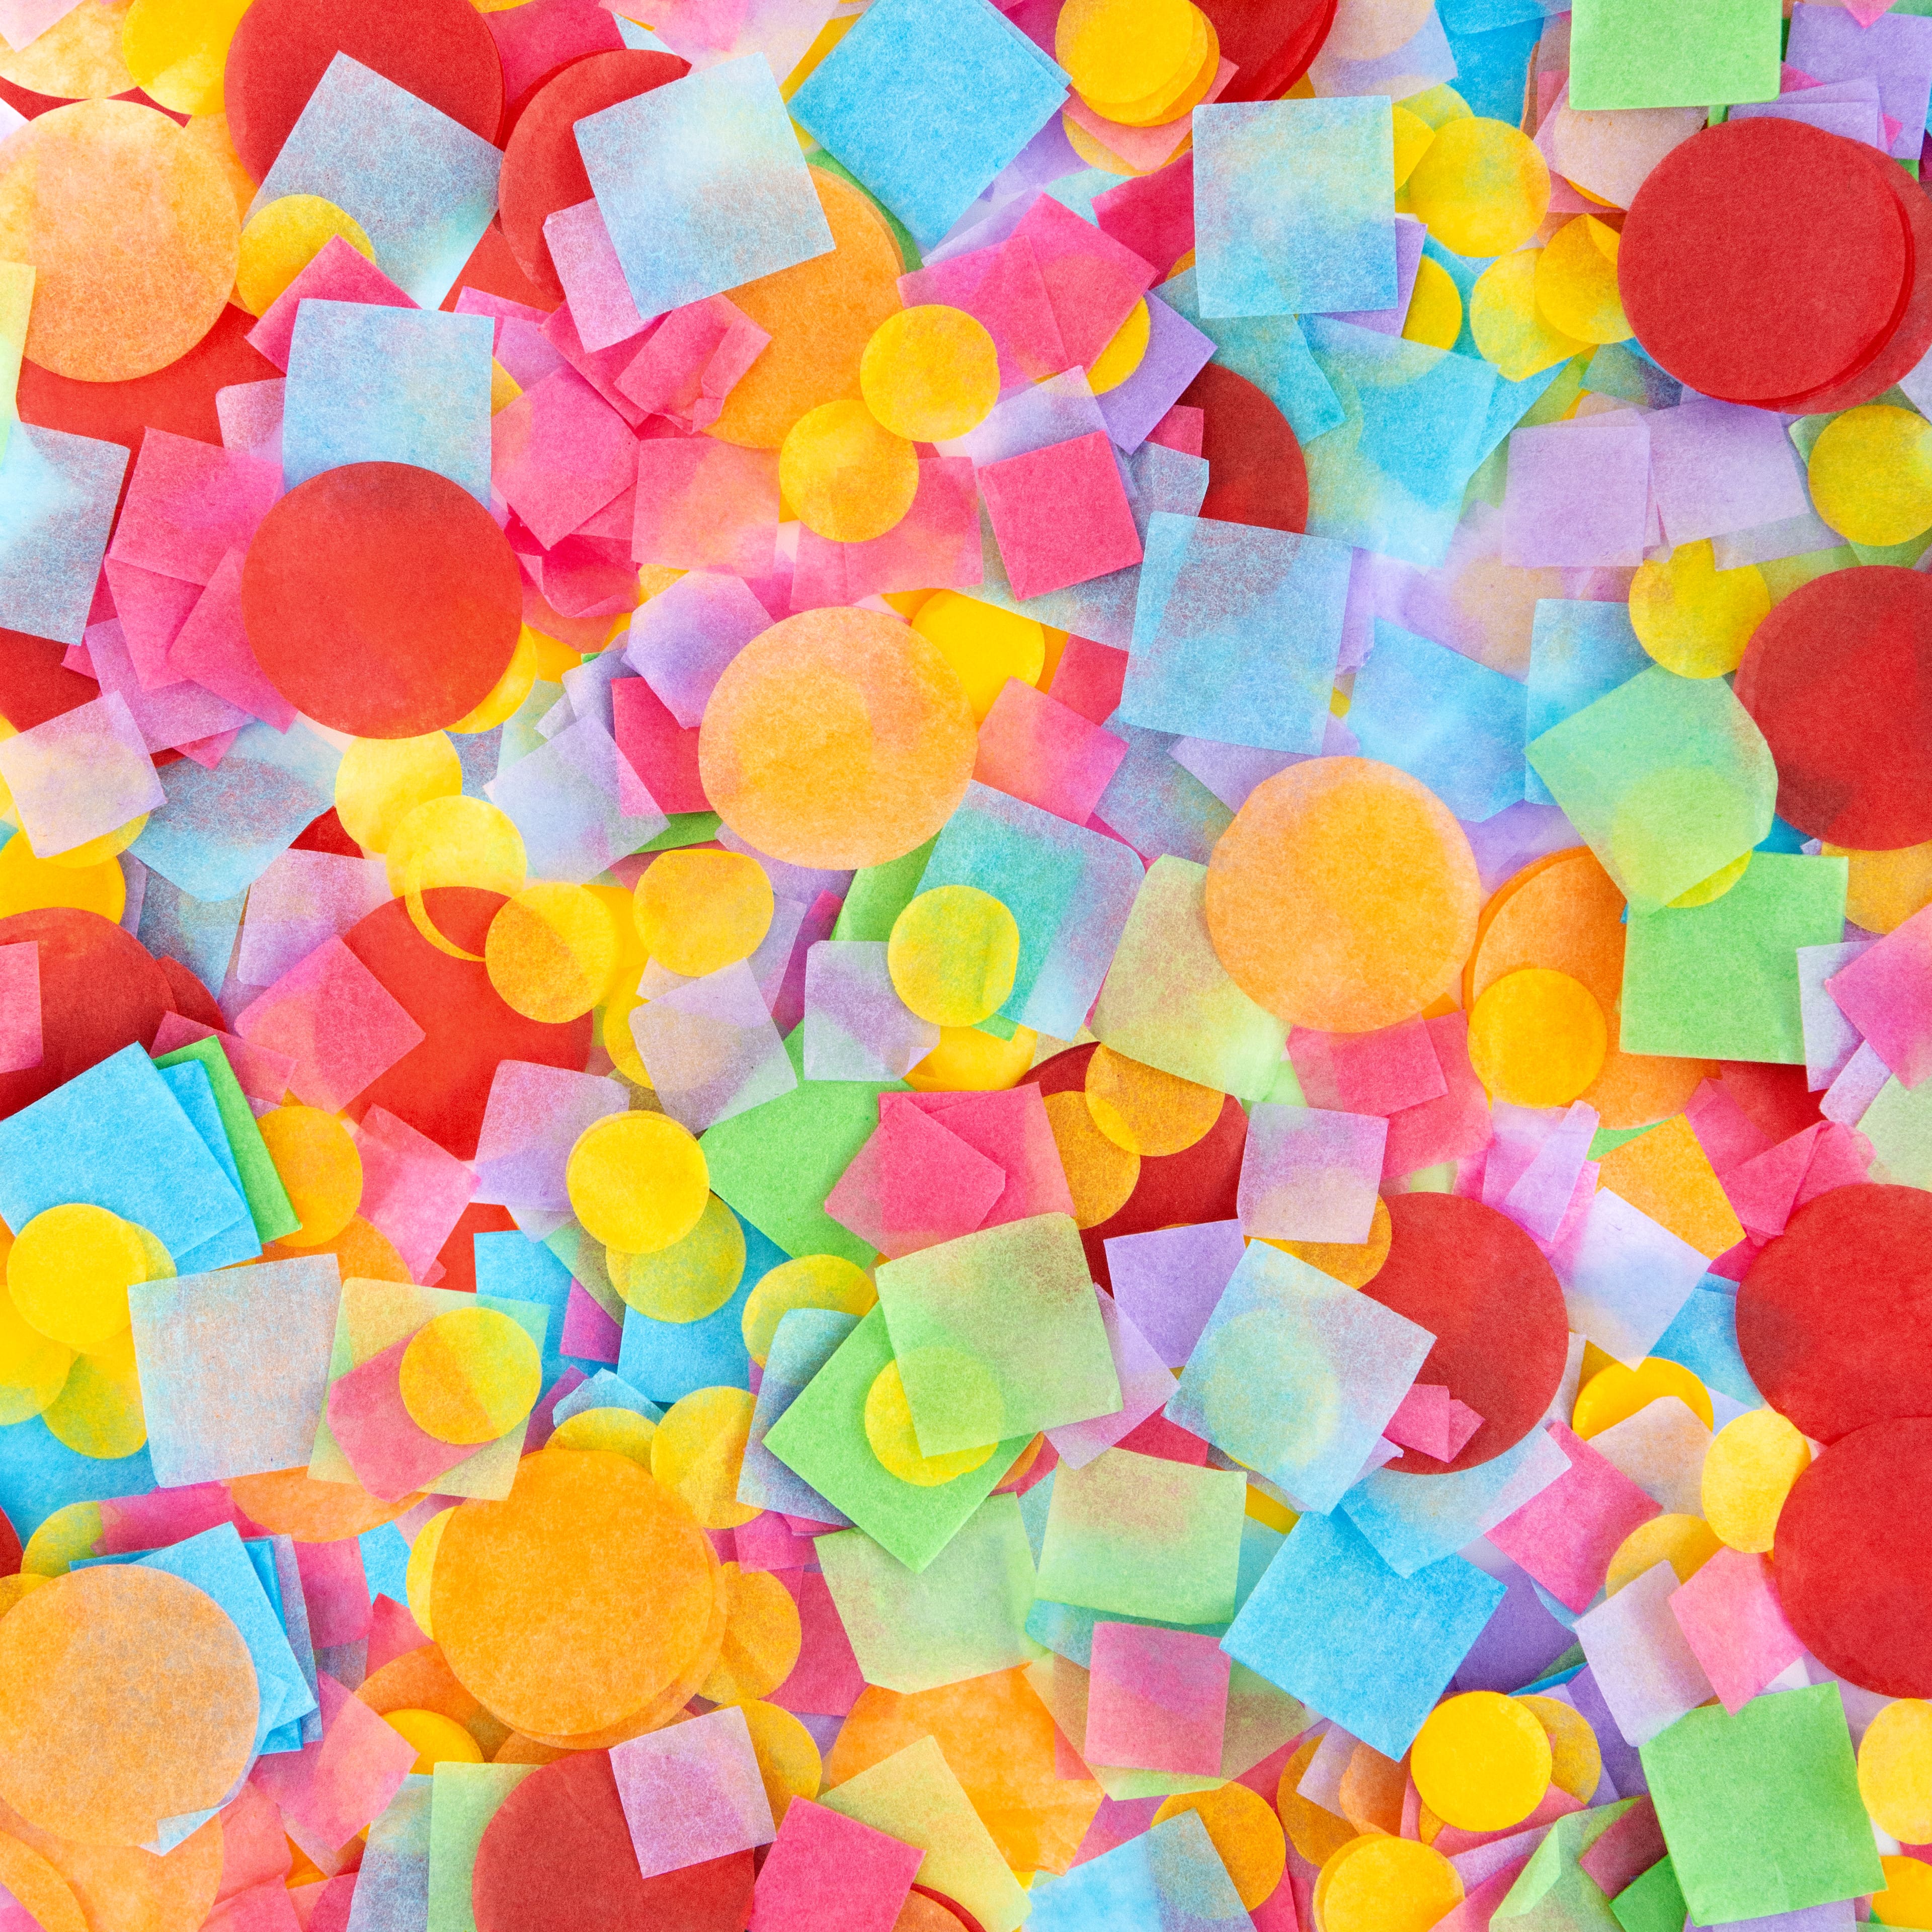 Cañones de Confetti Multi Color - 3 pzas